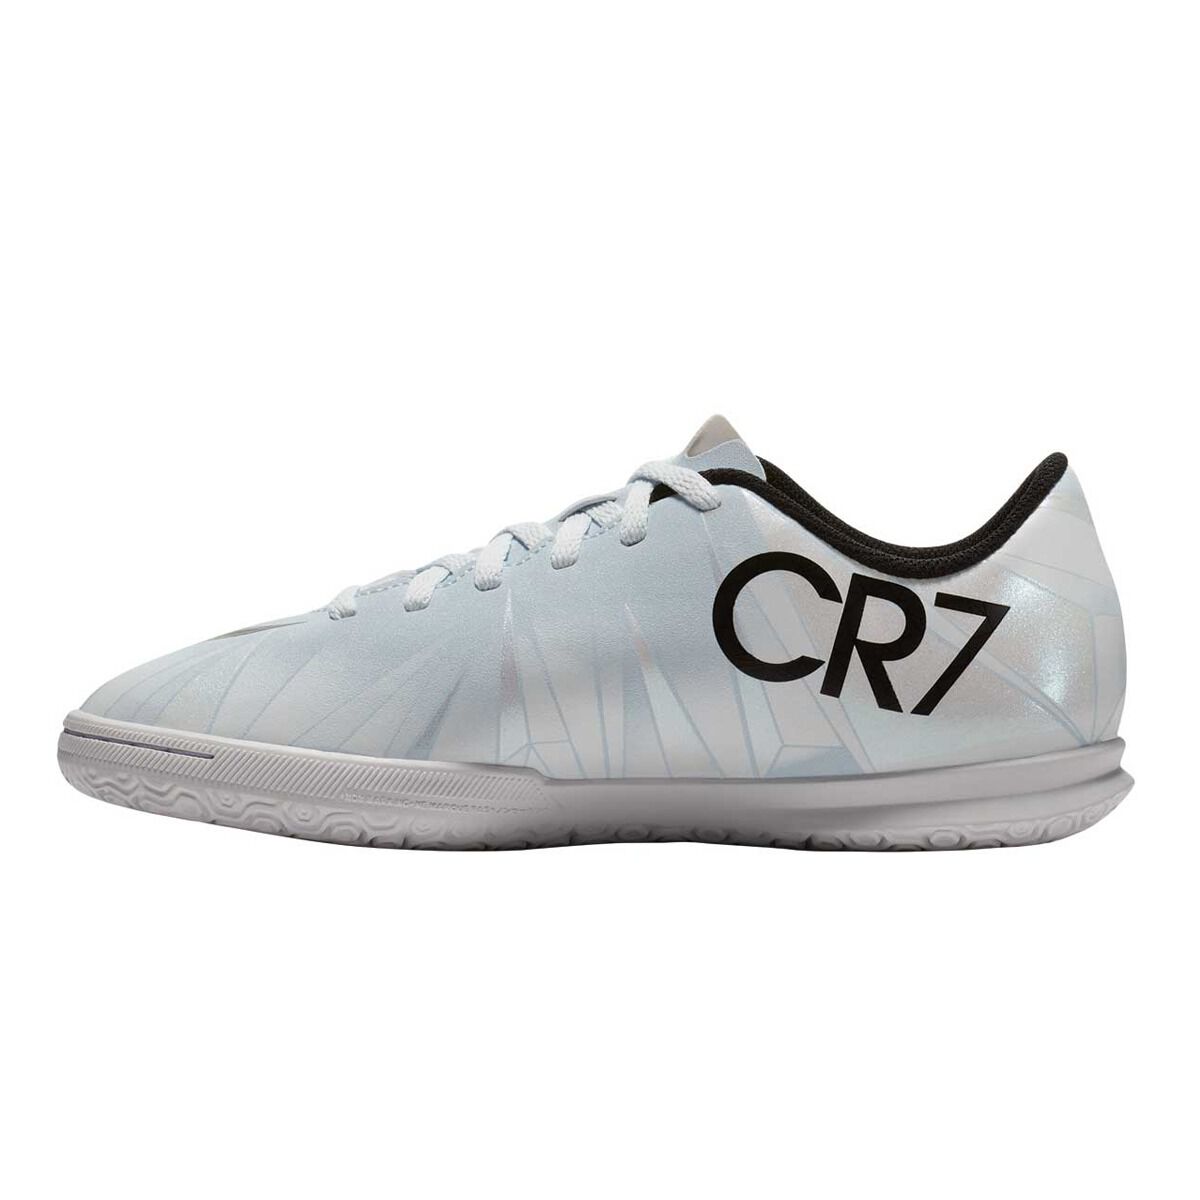 cr7 tennis shoes